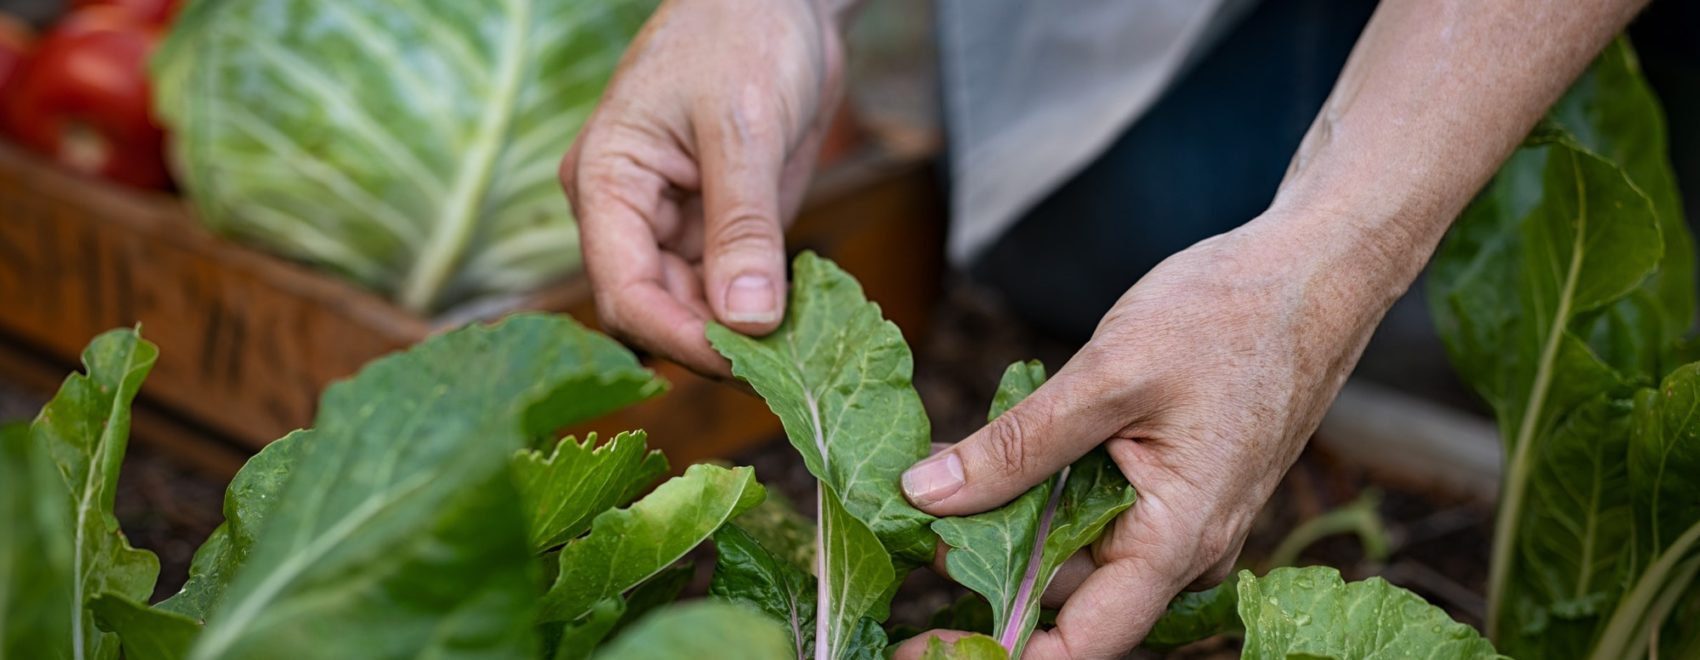 Farmer hands taking care of plant leaf